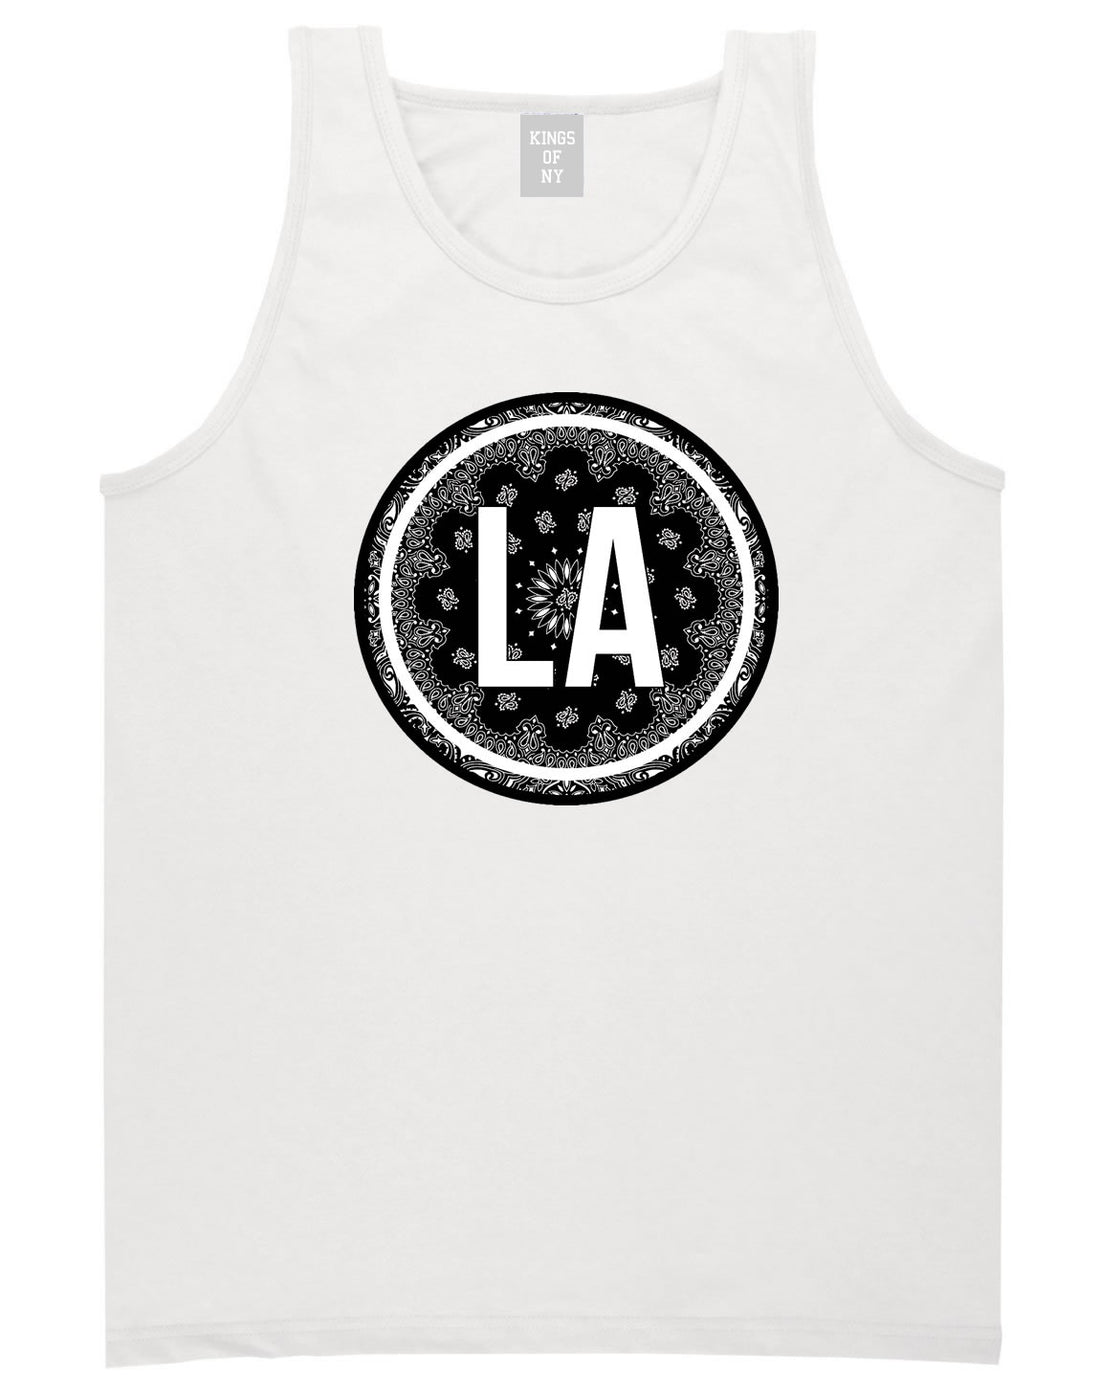 Kings Of NY La Los Angeles Cali California Bandana Tank Top in White